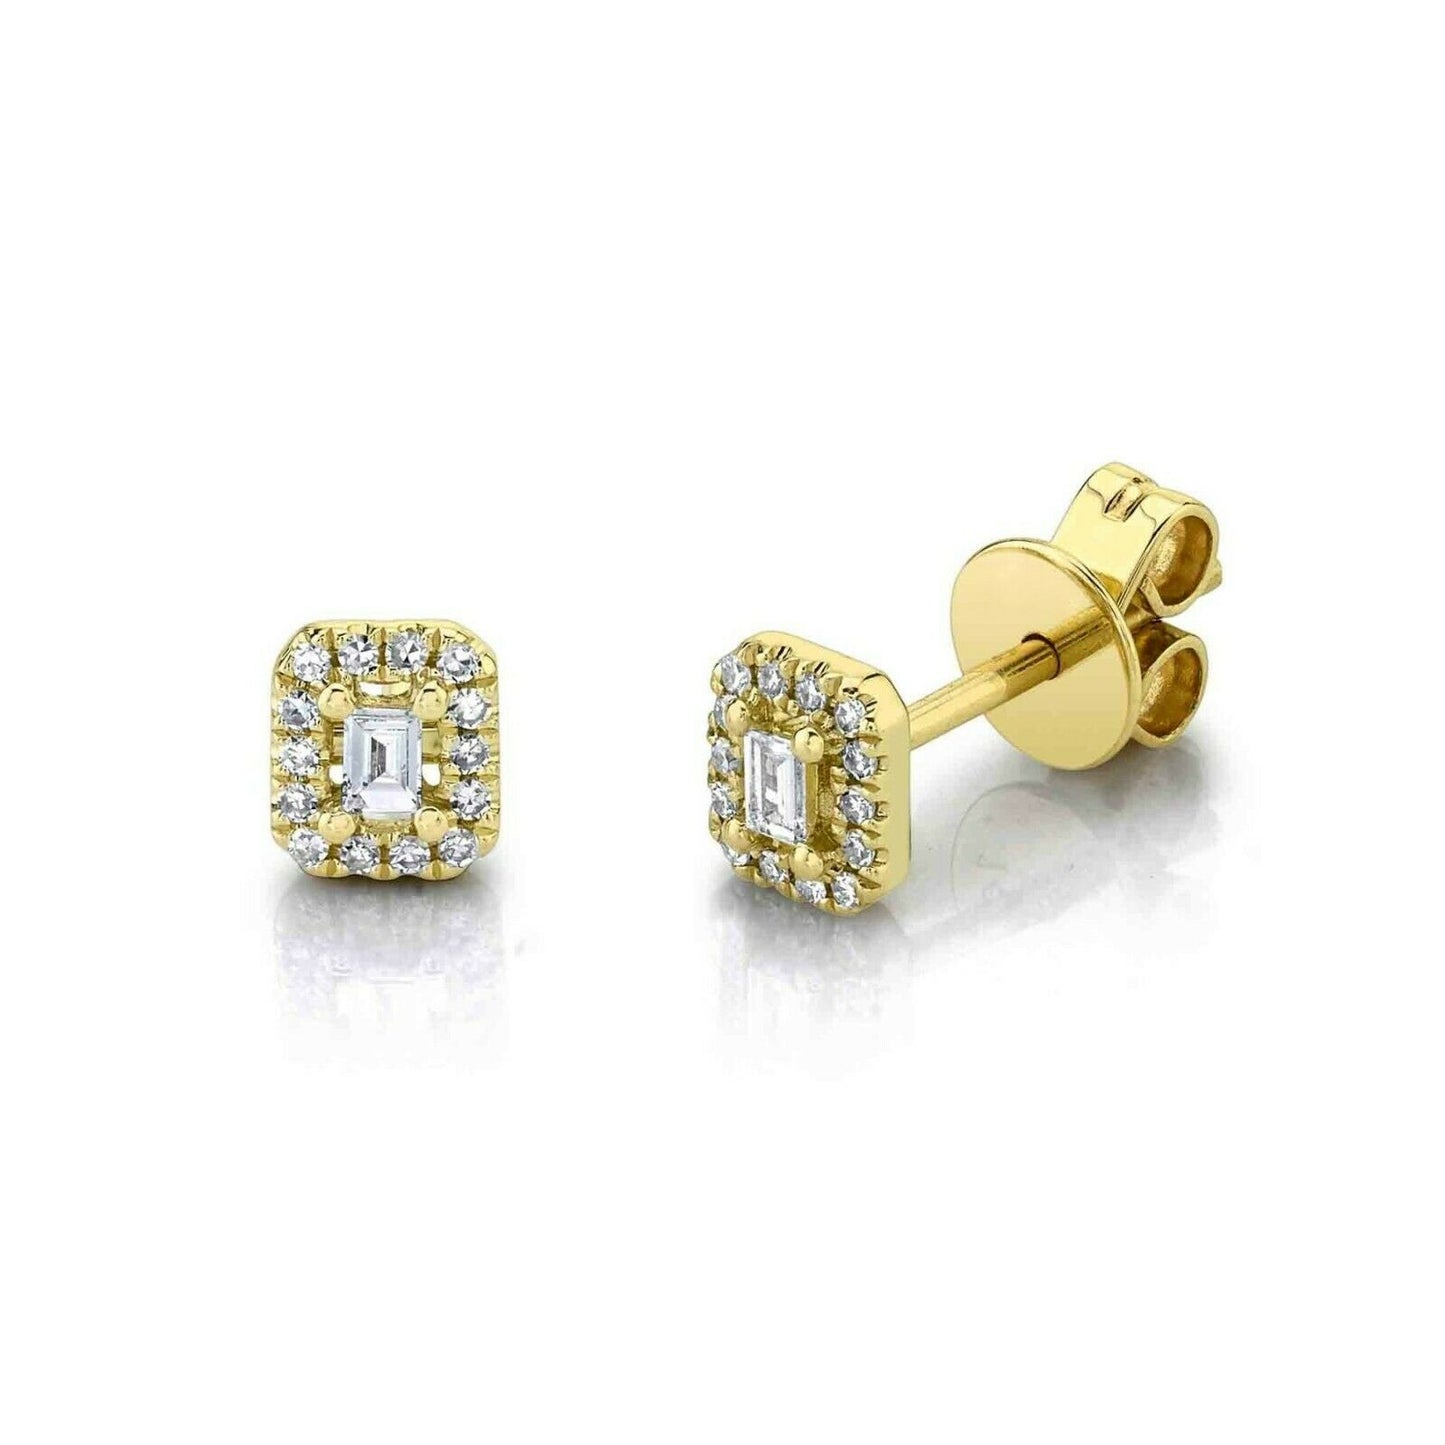 14K Gold 0.12 CT Baguette Cut Diamond Stud Earrings Halo Square